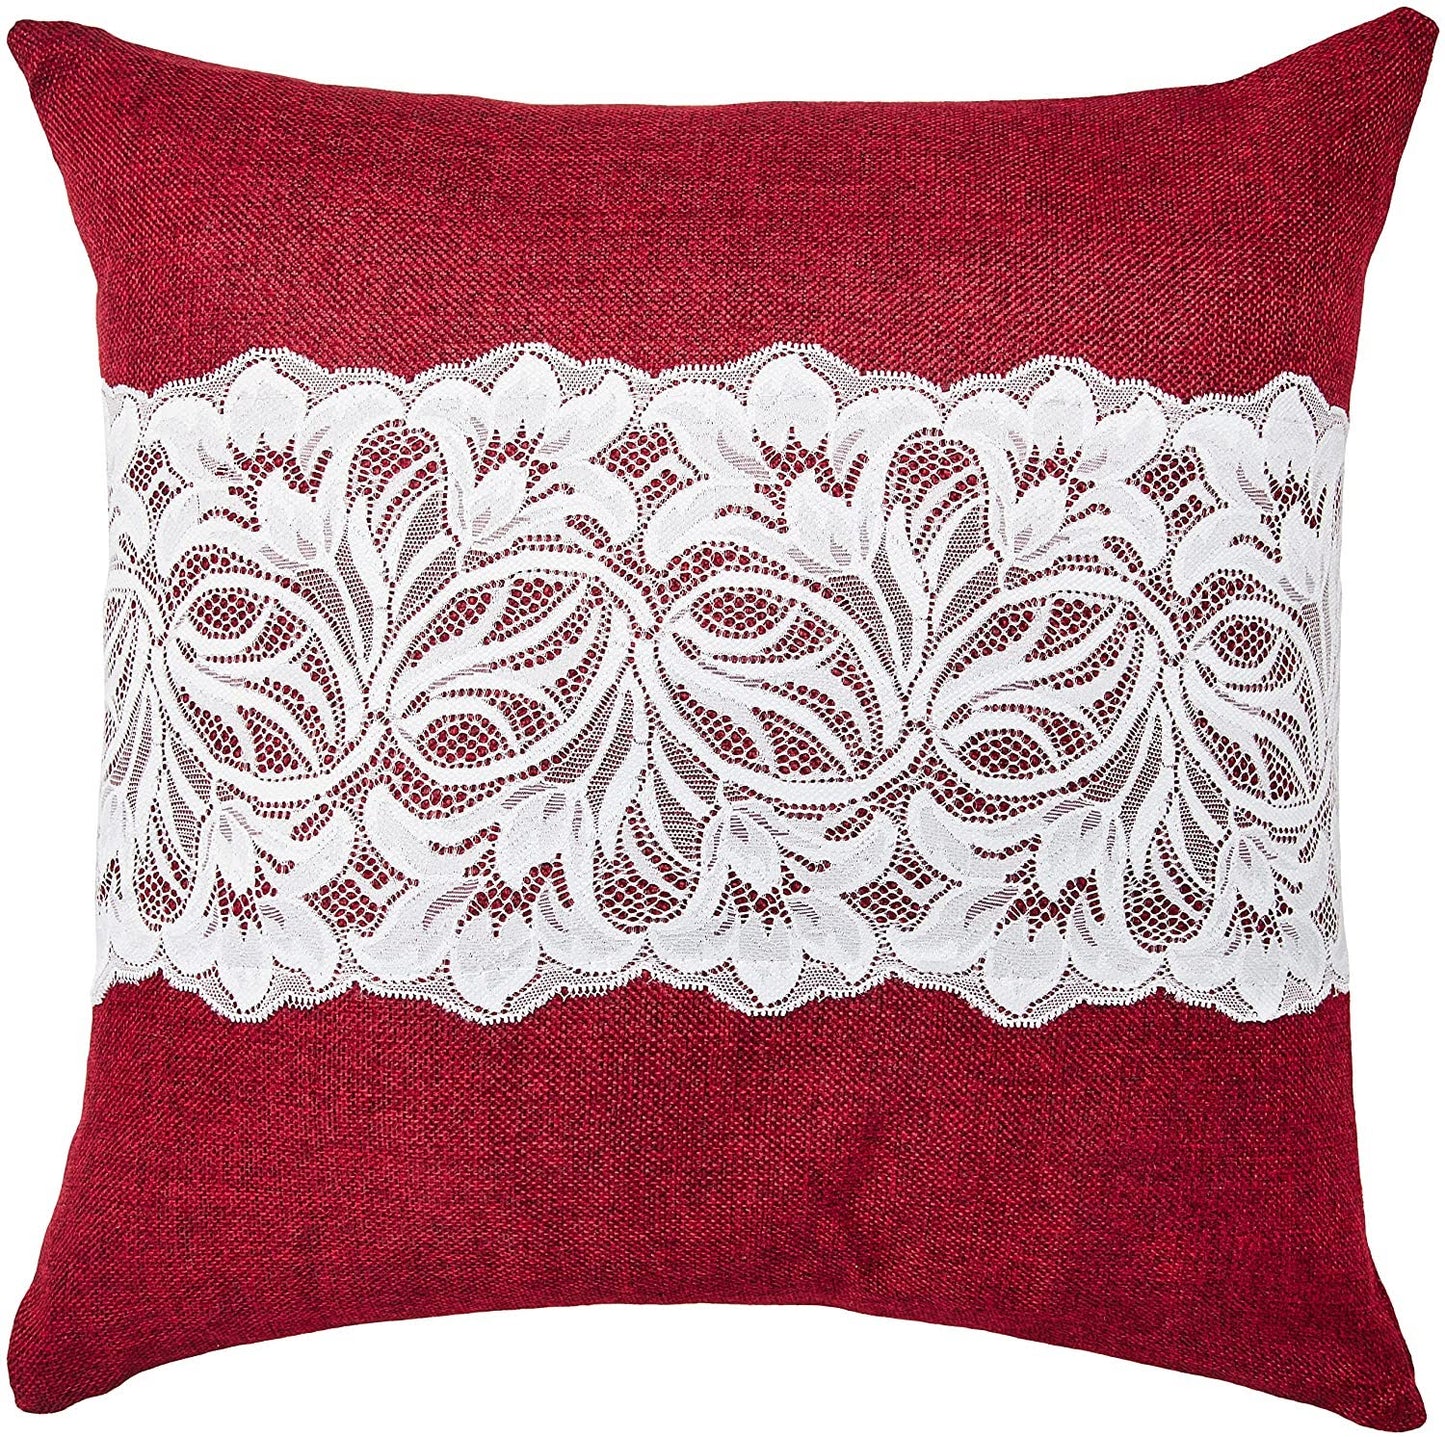 Eden Vintage Rustic Burlap Hessian Lace Pattern Decorative Throw Pillow Cover